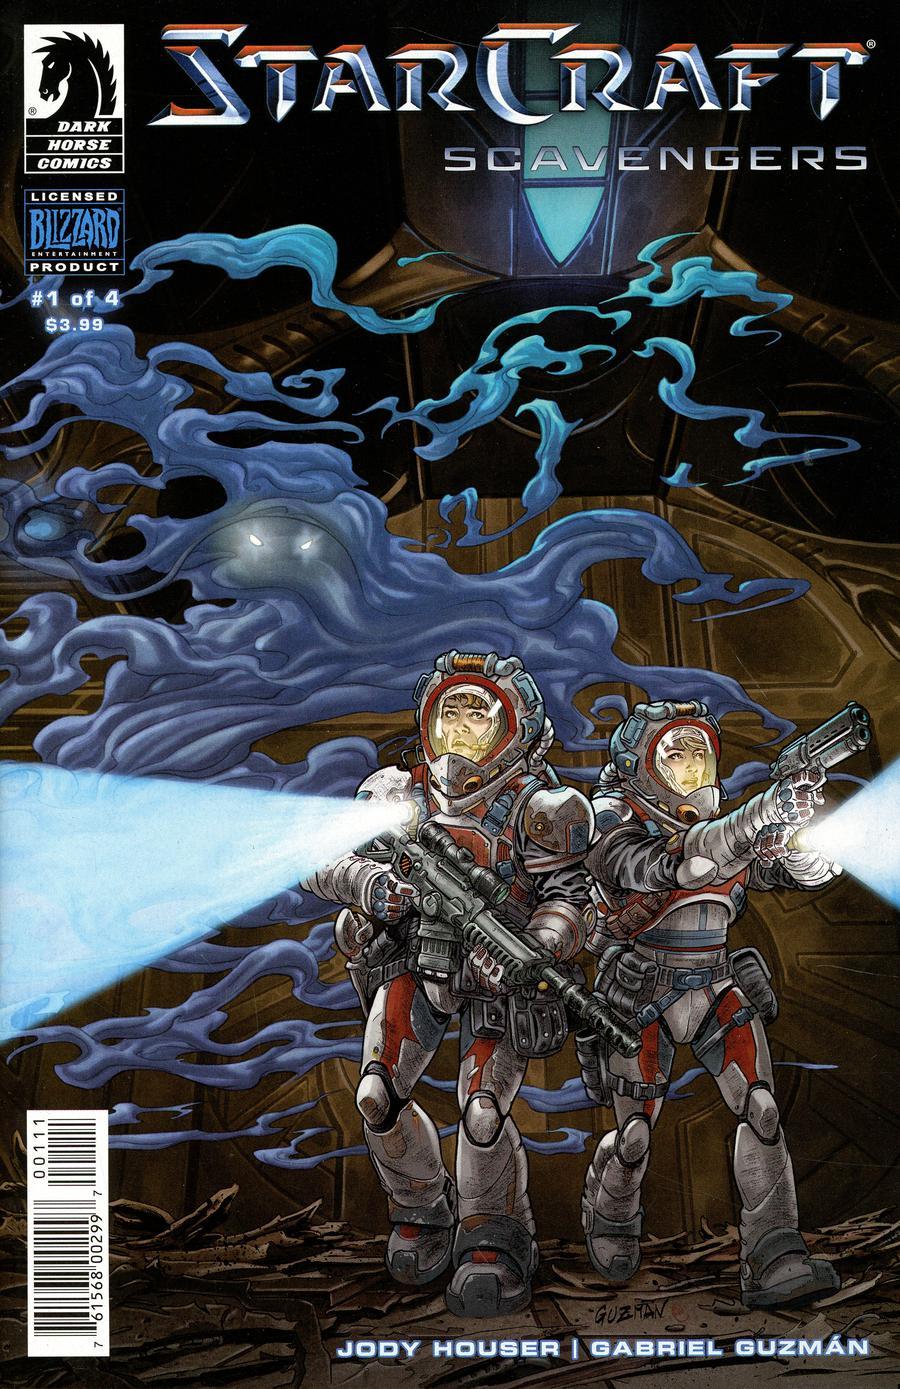 Starcraft Scavengers Vol. 1 #1